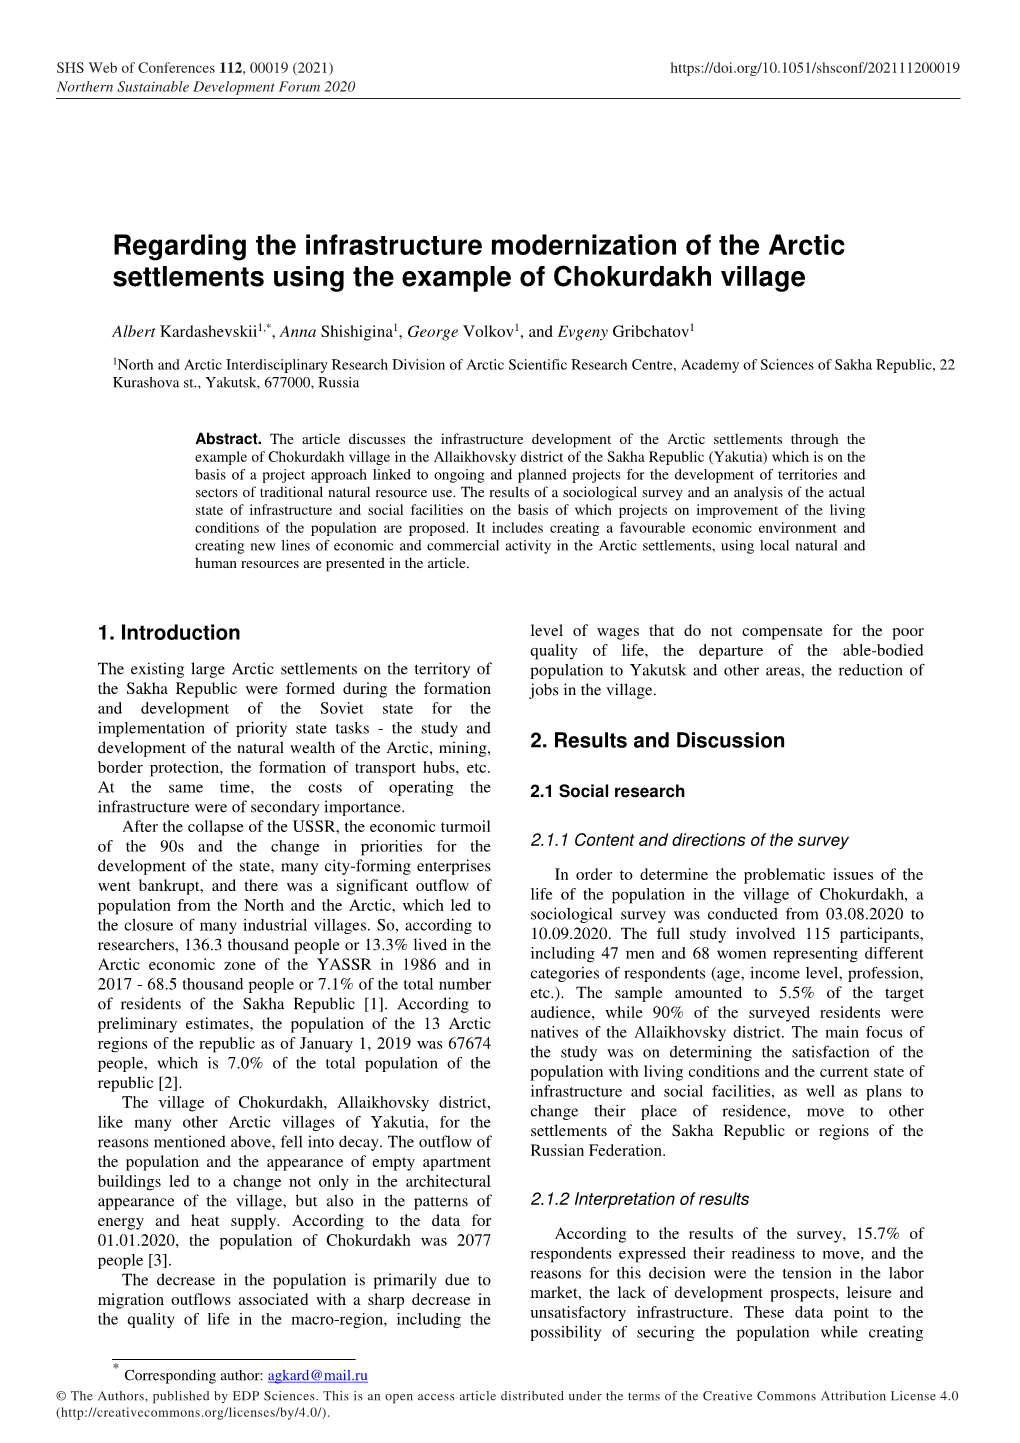 Regarding the Infrastructure Modernization of the Arctic Settlements Using the Example of Chokurdakh Village